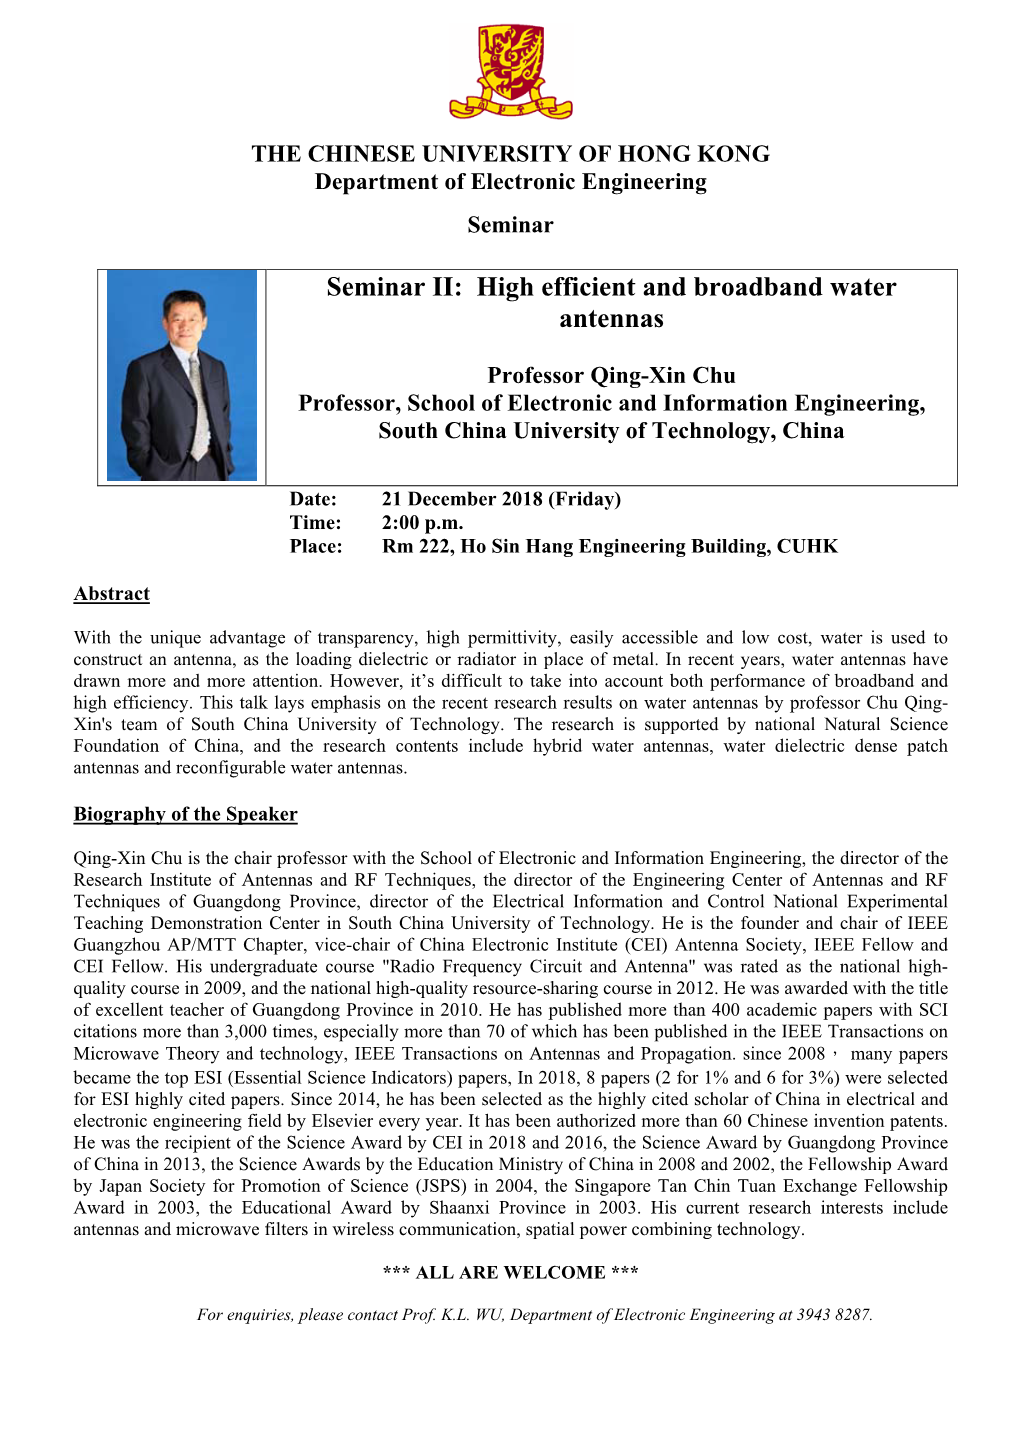 Seminar II: High Efficient and Broadband Water Antennas